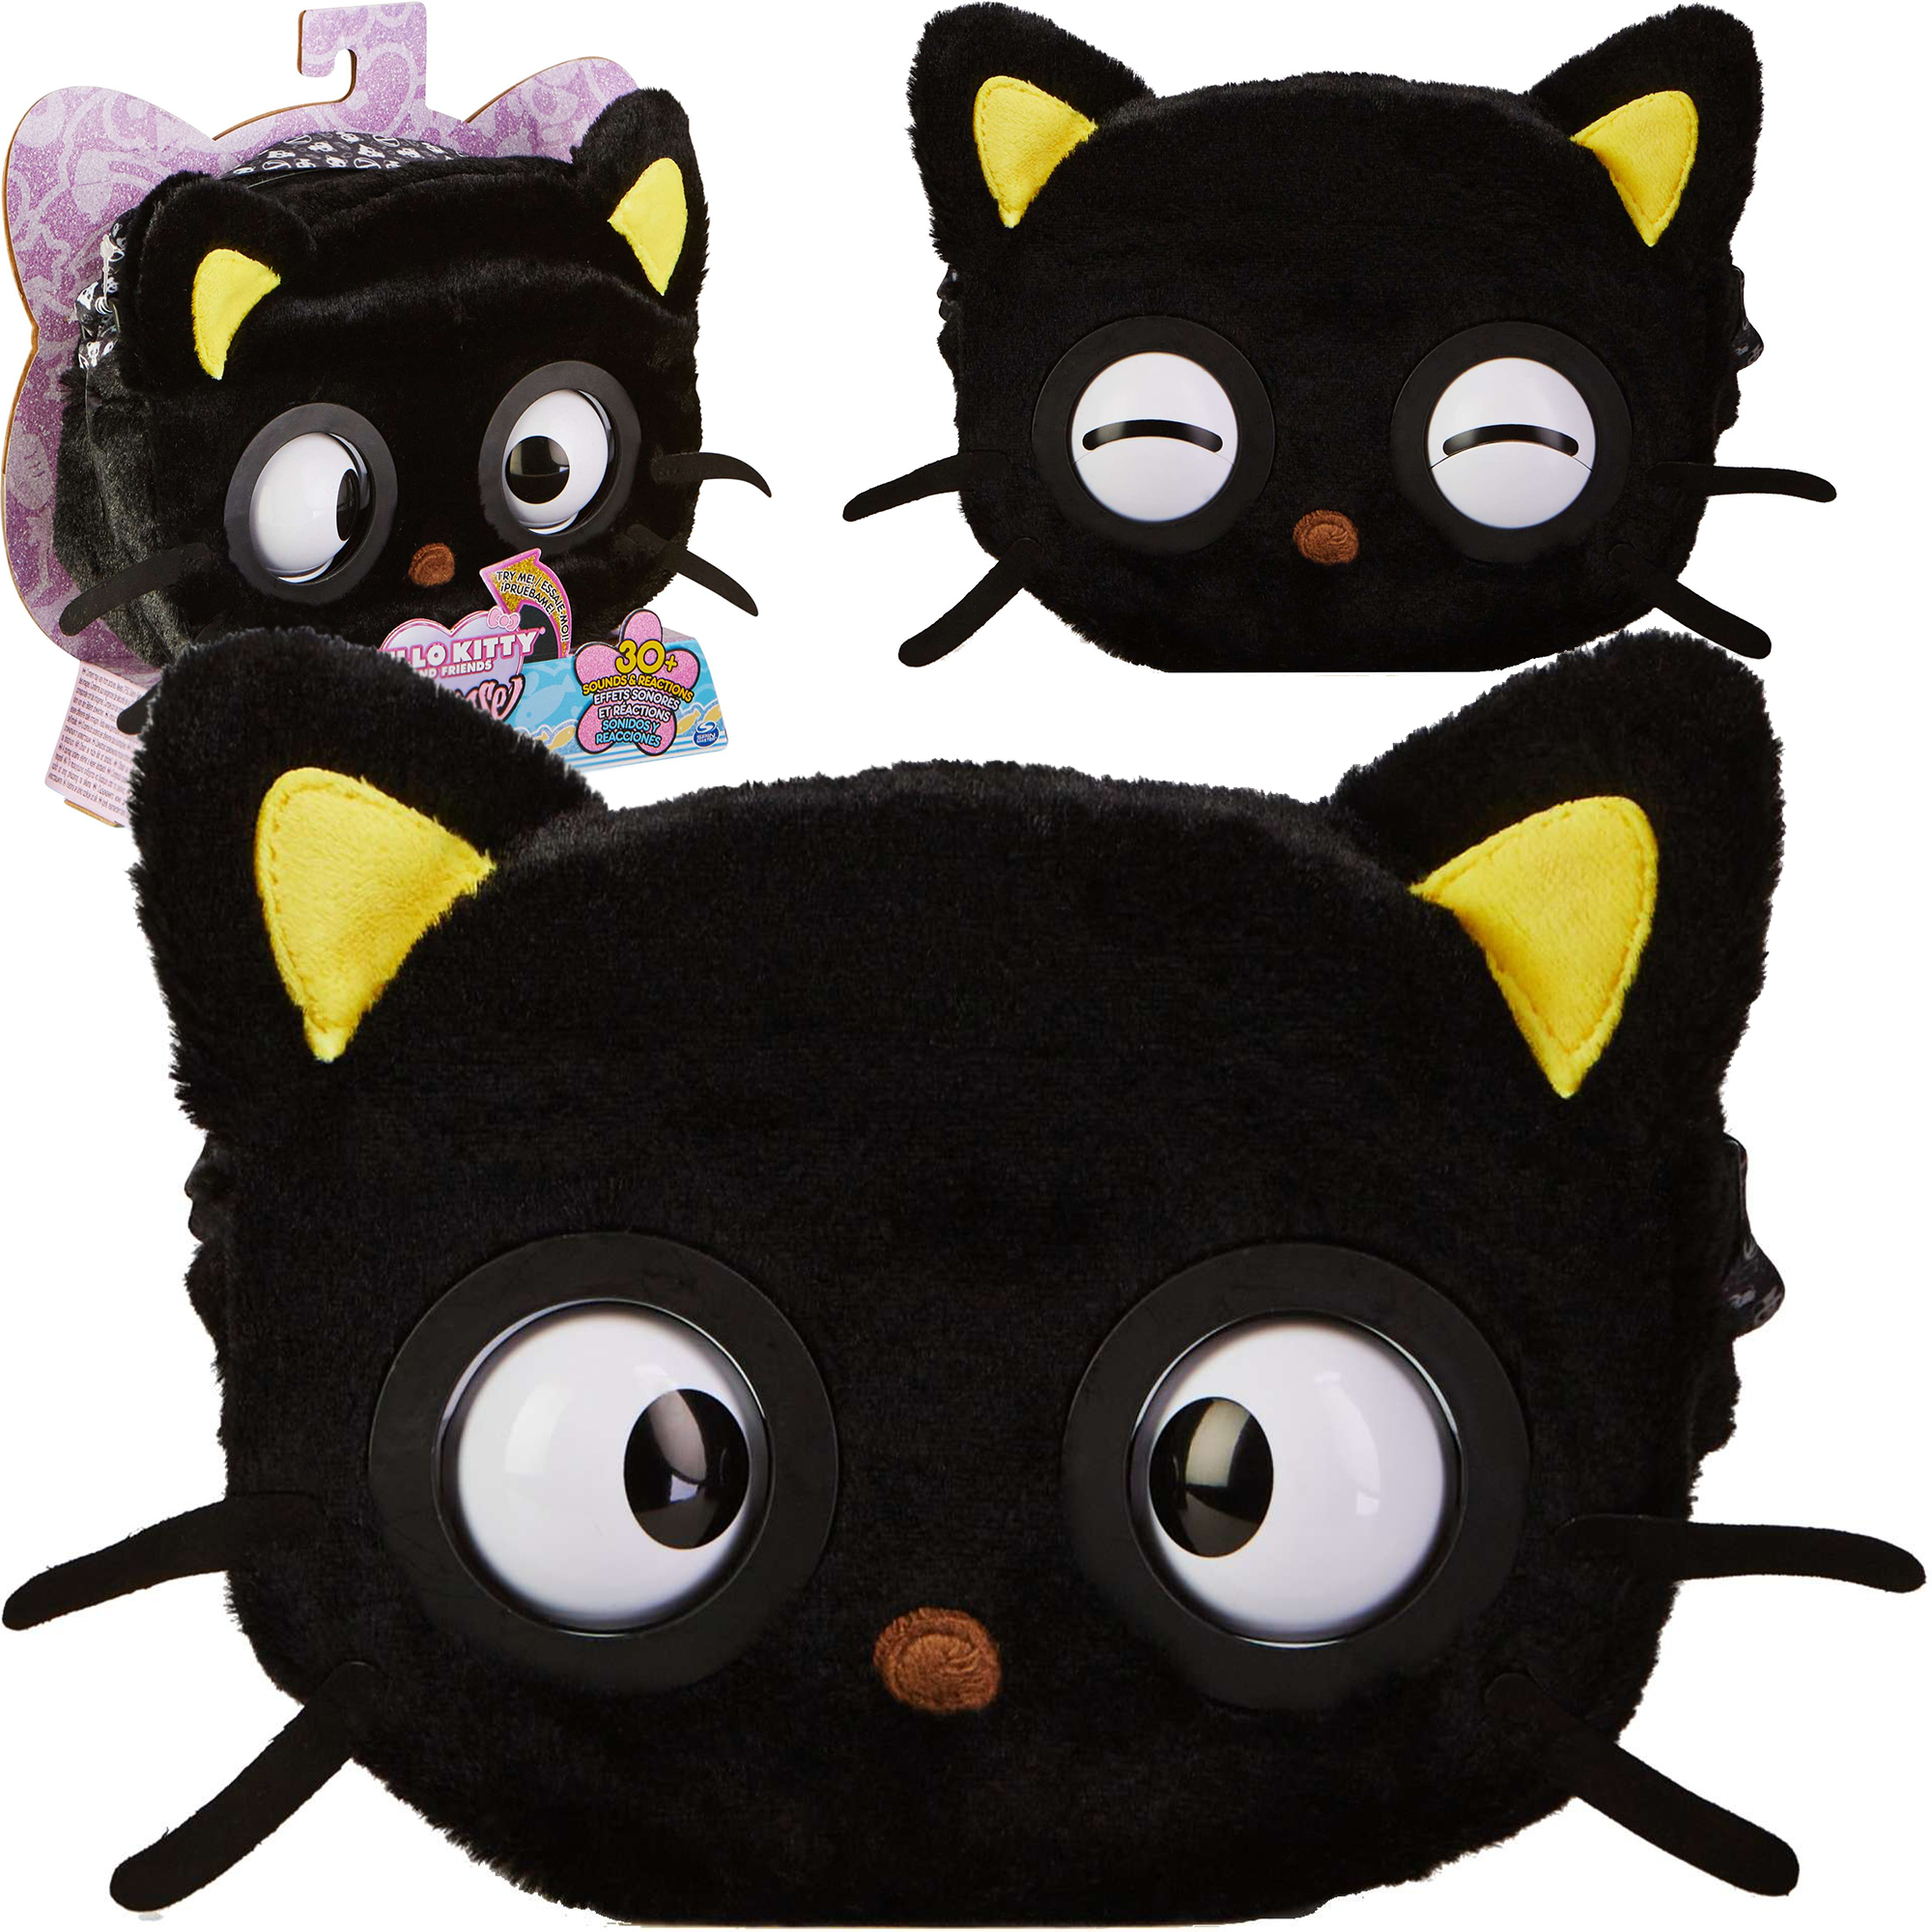 Purse Pets Hello Kitty Chococat Interaktywna torebka z oczami Kot Czarny Kotek Dwik